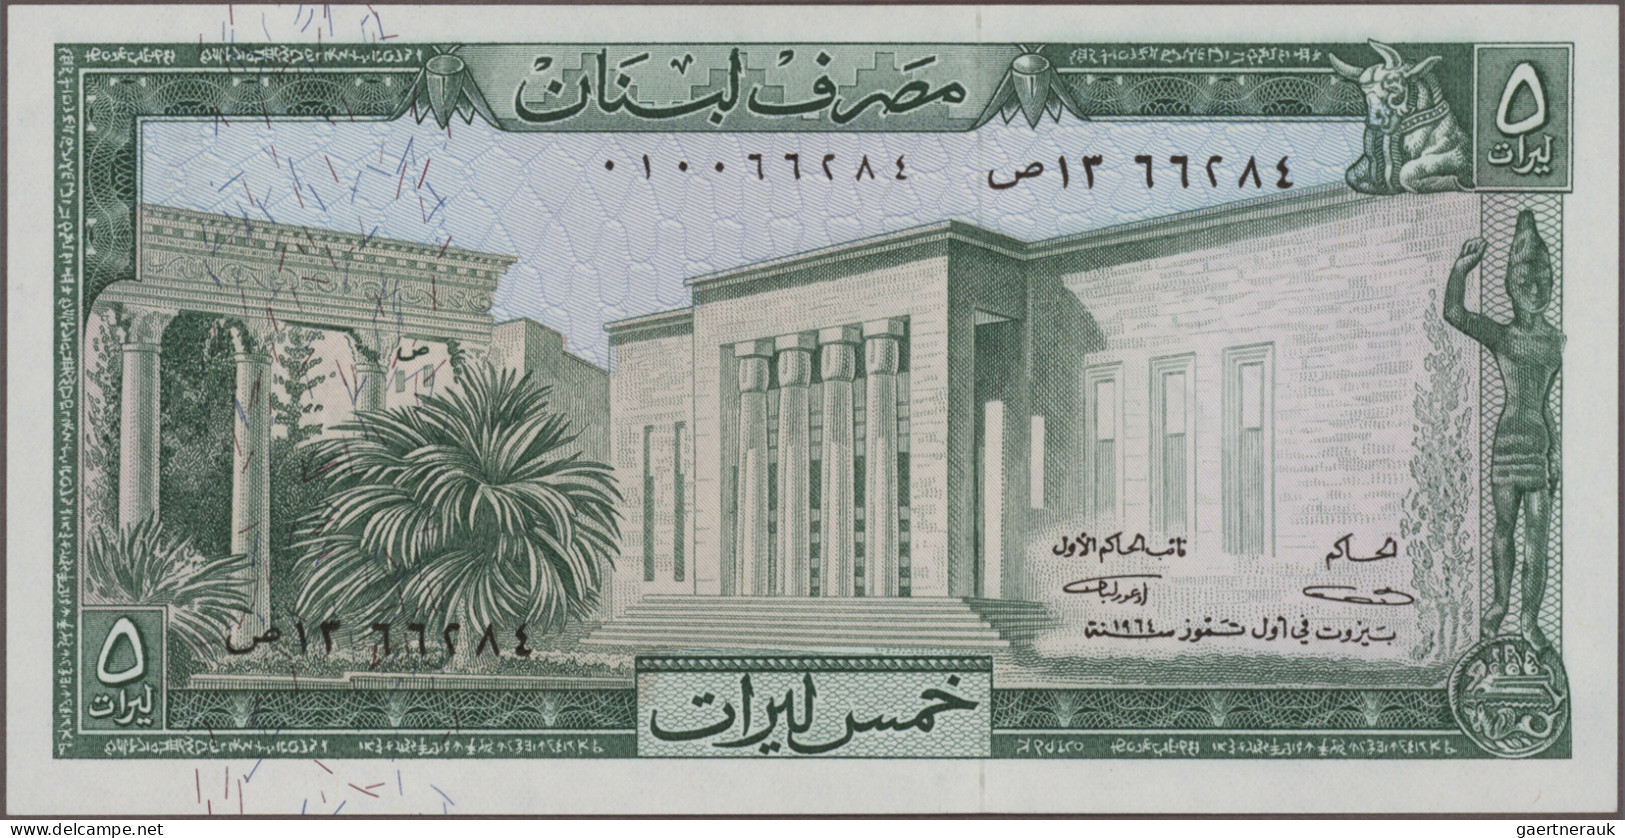 Lebanon: Banque du Liban, huge lot with 31 banknotes, series 1968-2014, 1-100.00